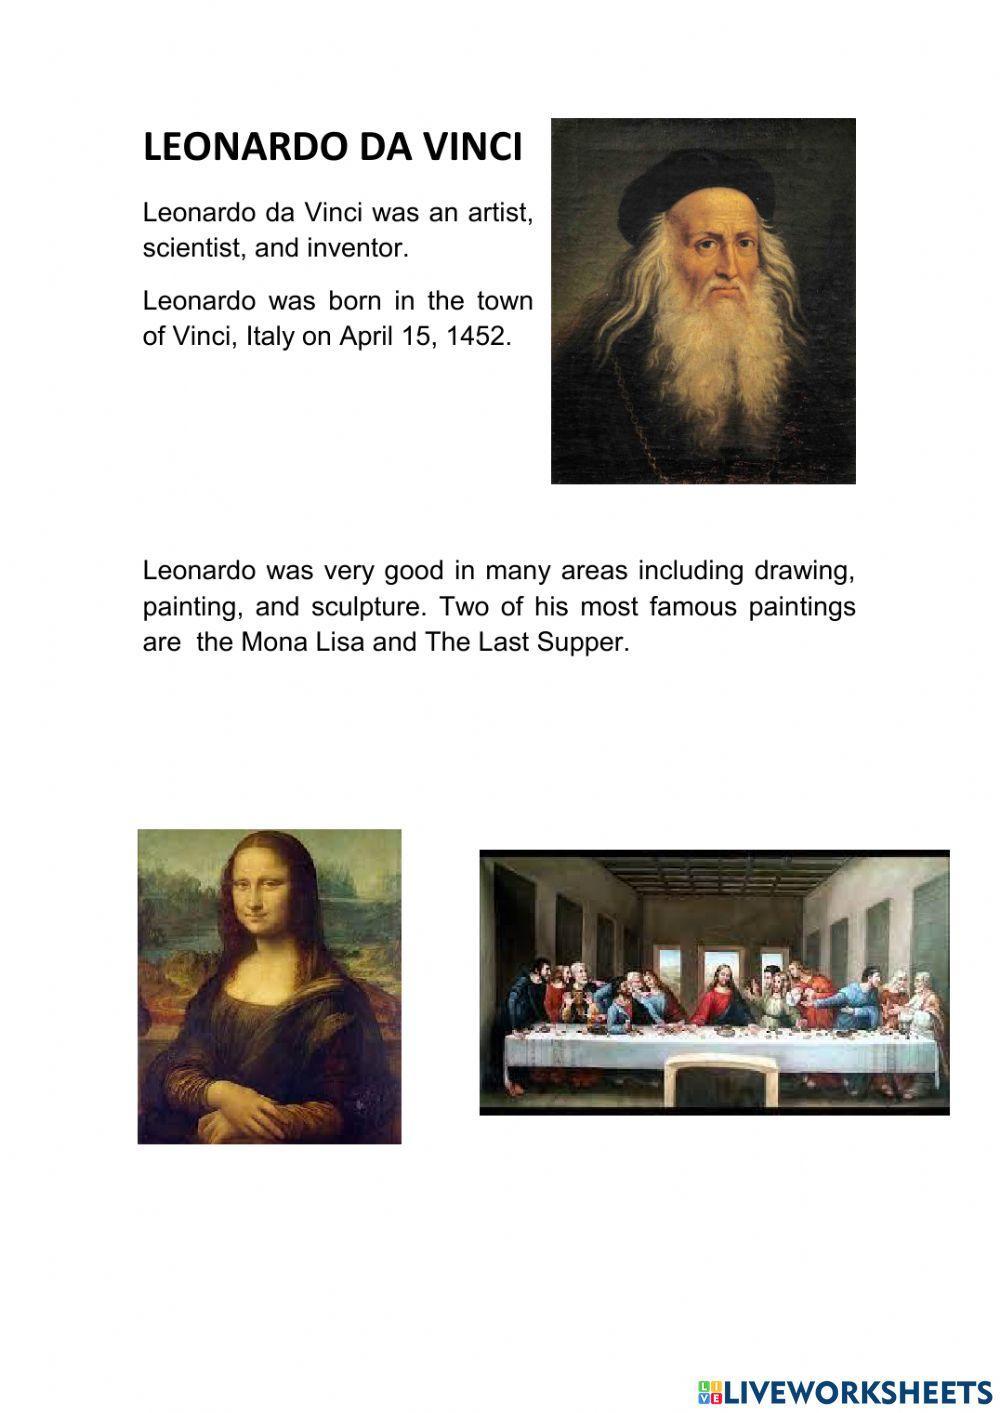 Leonardo da vinci- inventor